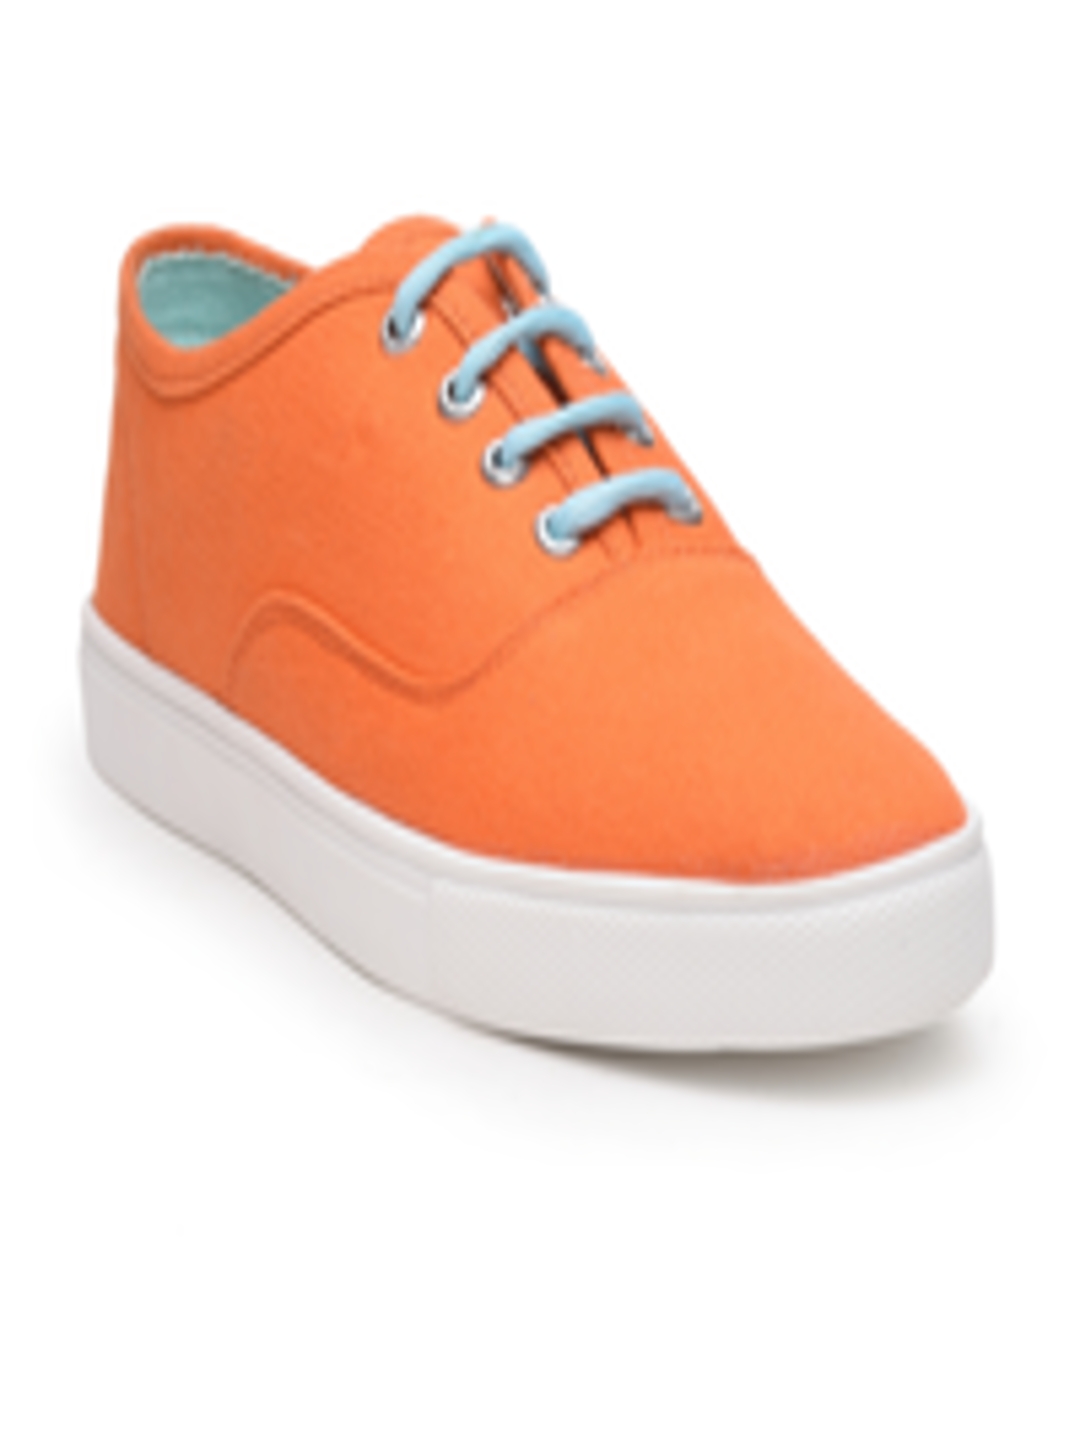 Buy Nell Women Orange Sneakers Casual Shoes for Women